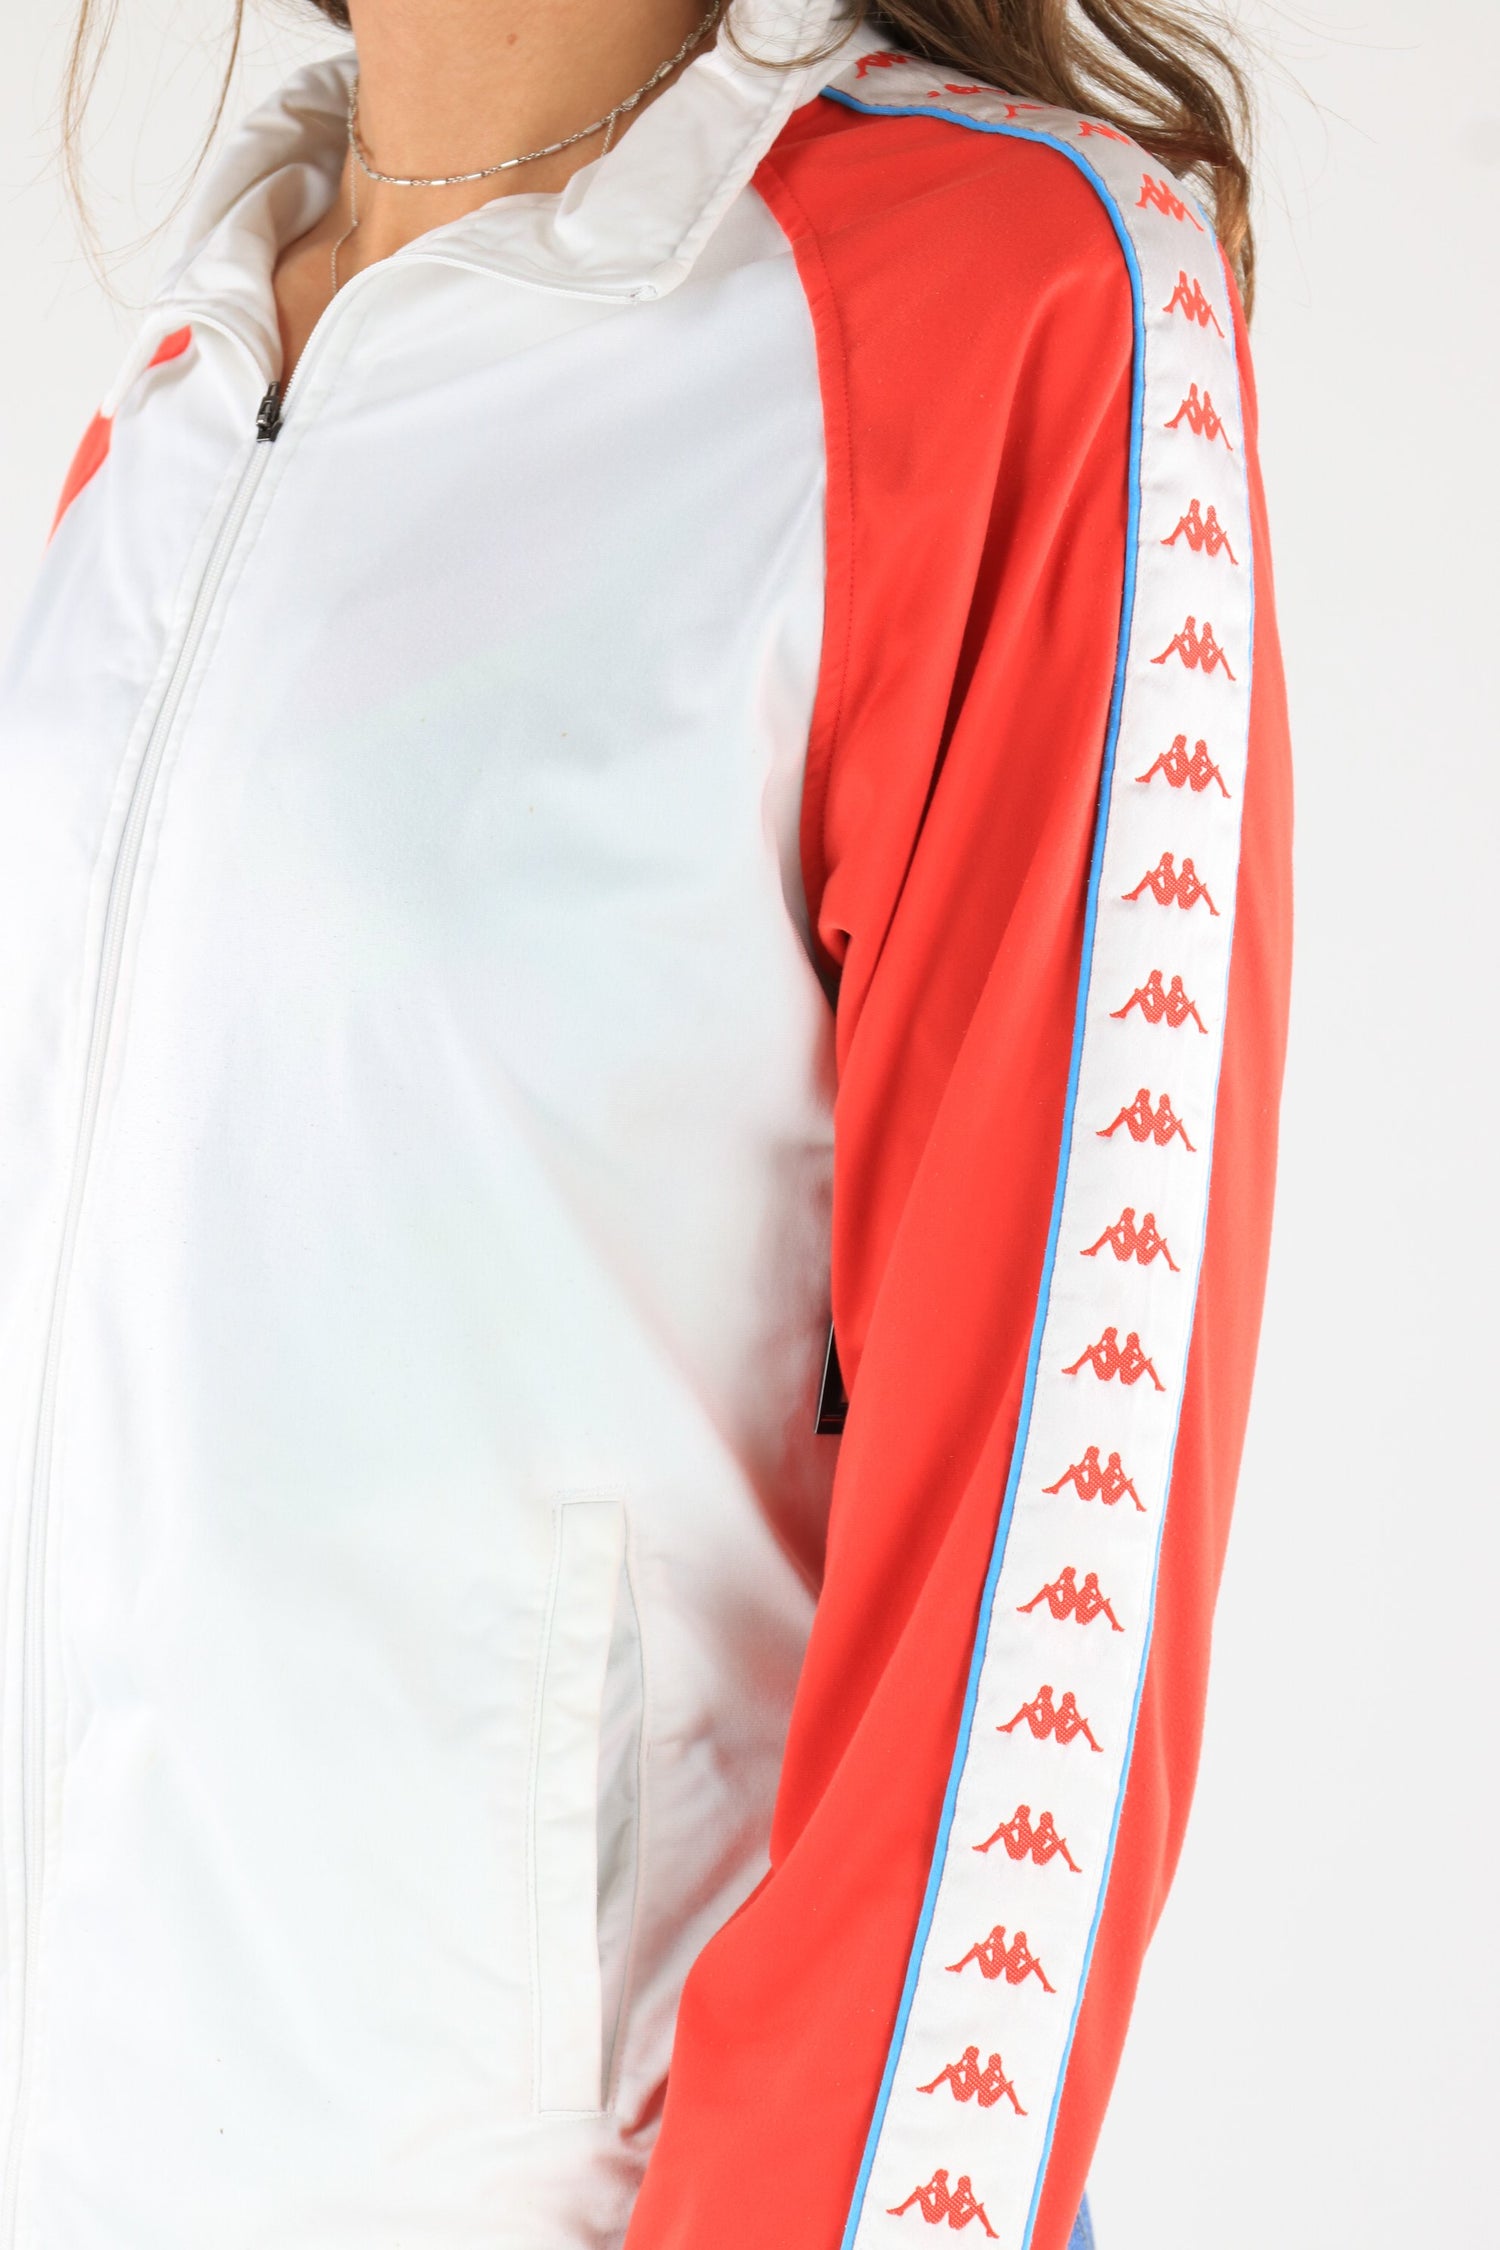 Kappa Track Jacket Red/White Medium